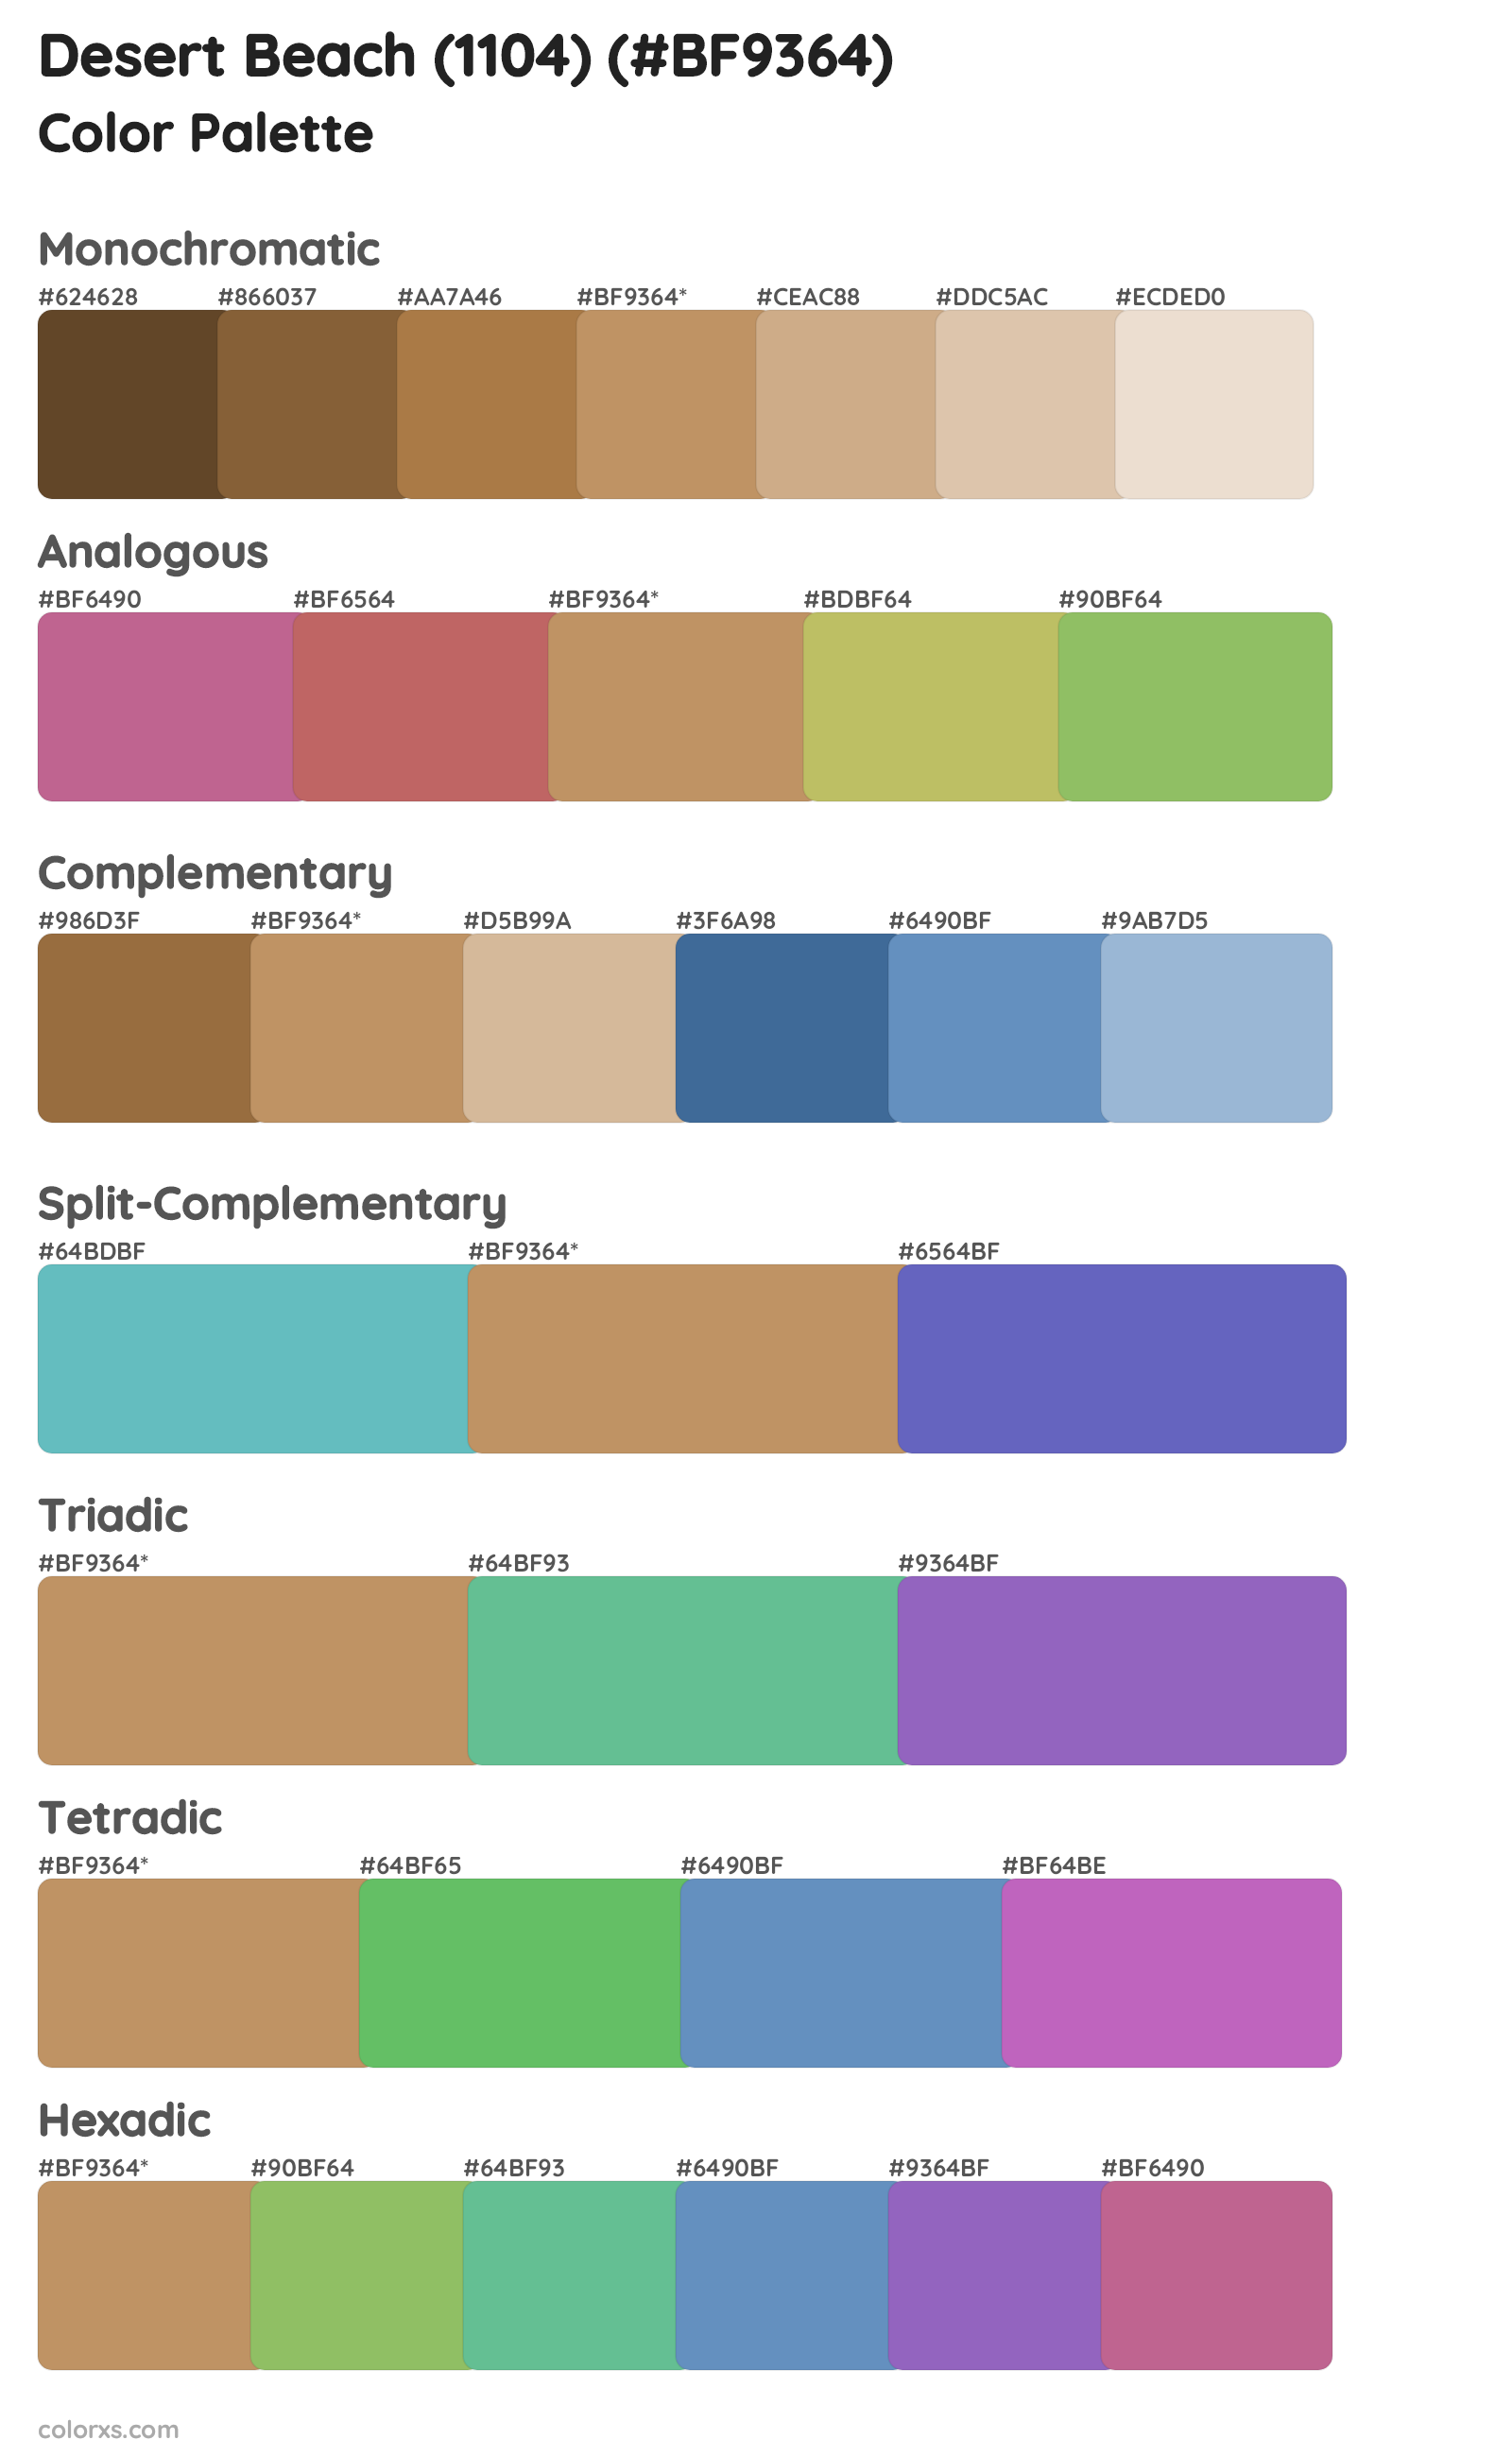 Desert Beach (1104) Color Scheme Palettes